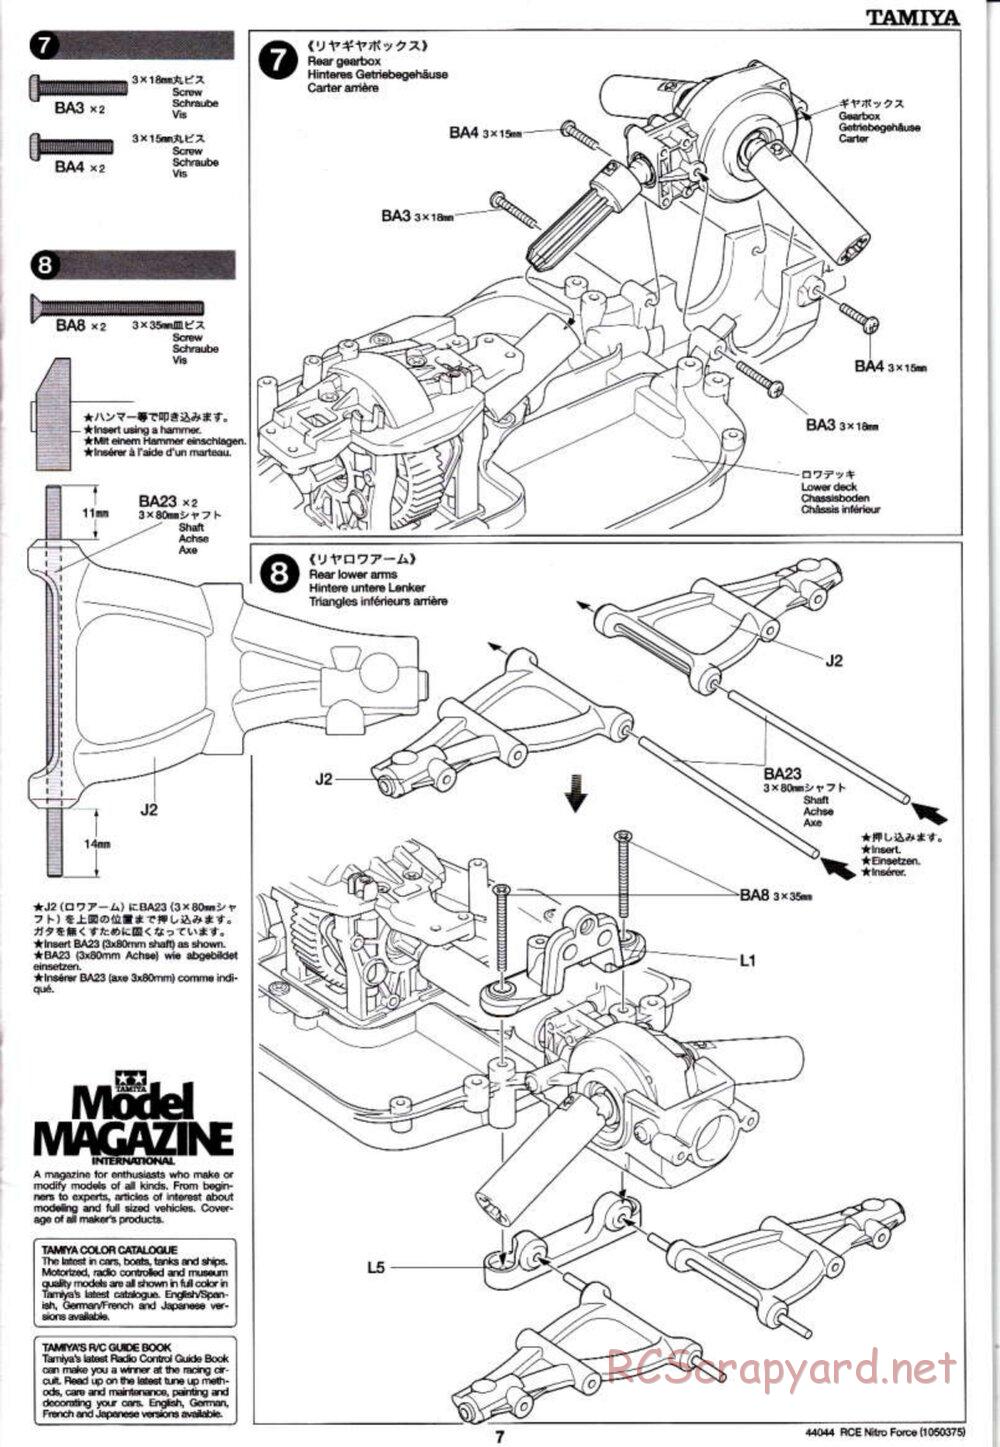 Tamiya - Nitro Force - NDF-01 Chassis - Manual - Page 7